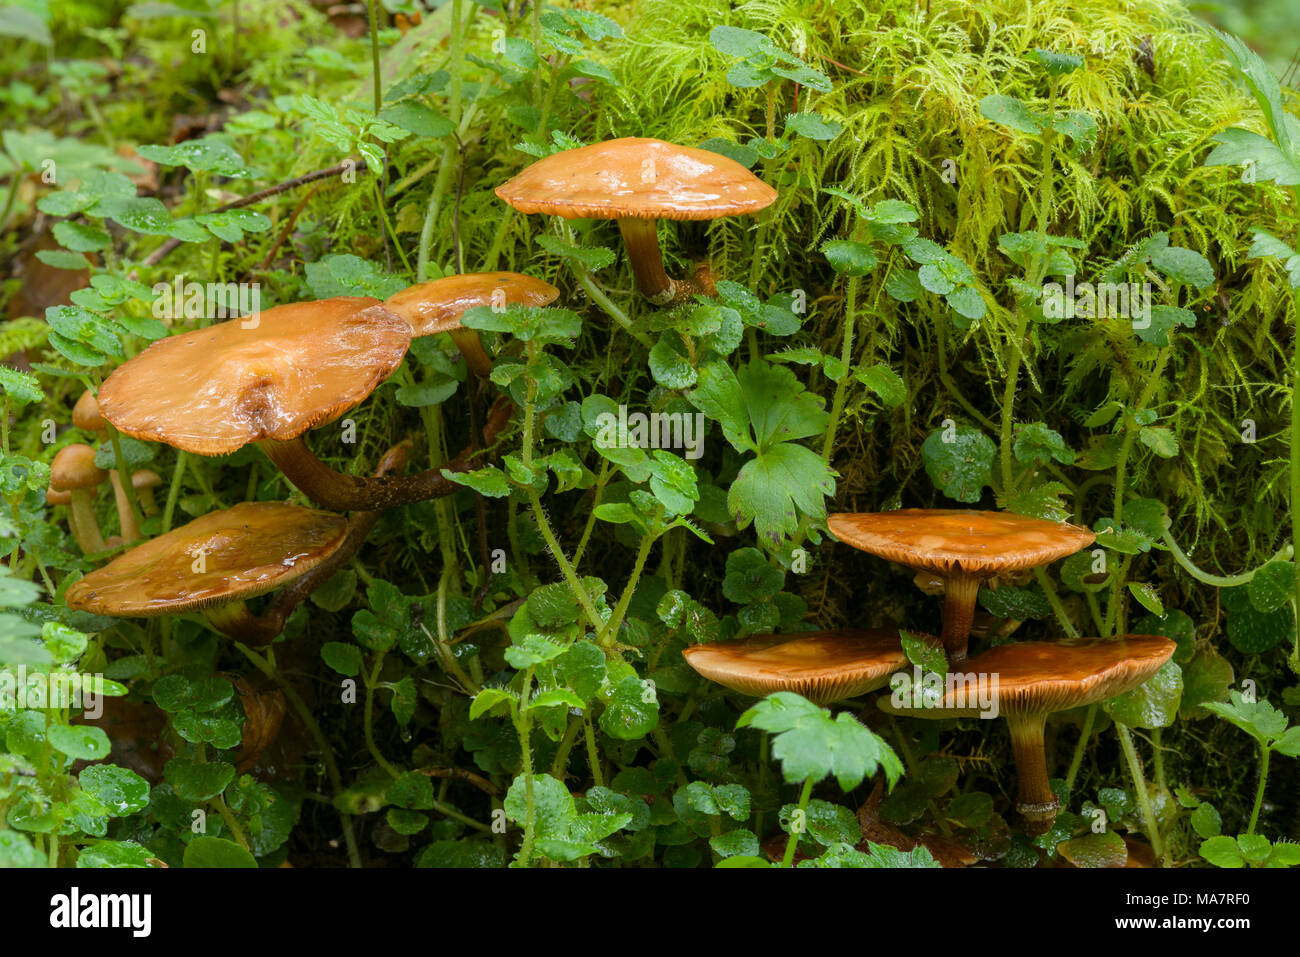 Mature Sheathed Woodtuft mushrooms (Kuehneromyces mutabilis, also known as Pholiota mutabilis) growing on a rotting tree in Dartmoor National Park, England. Stock Photo